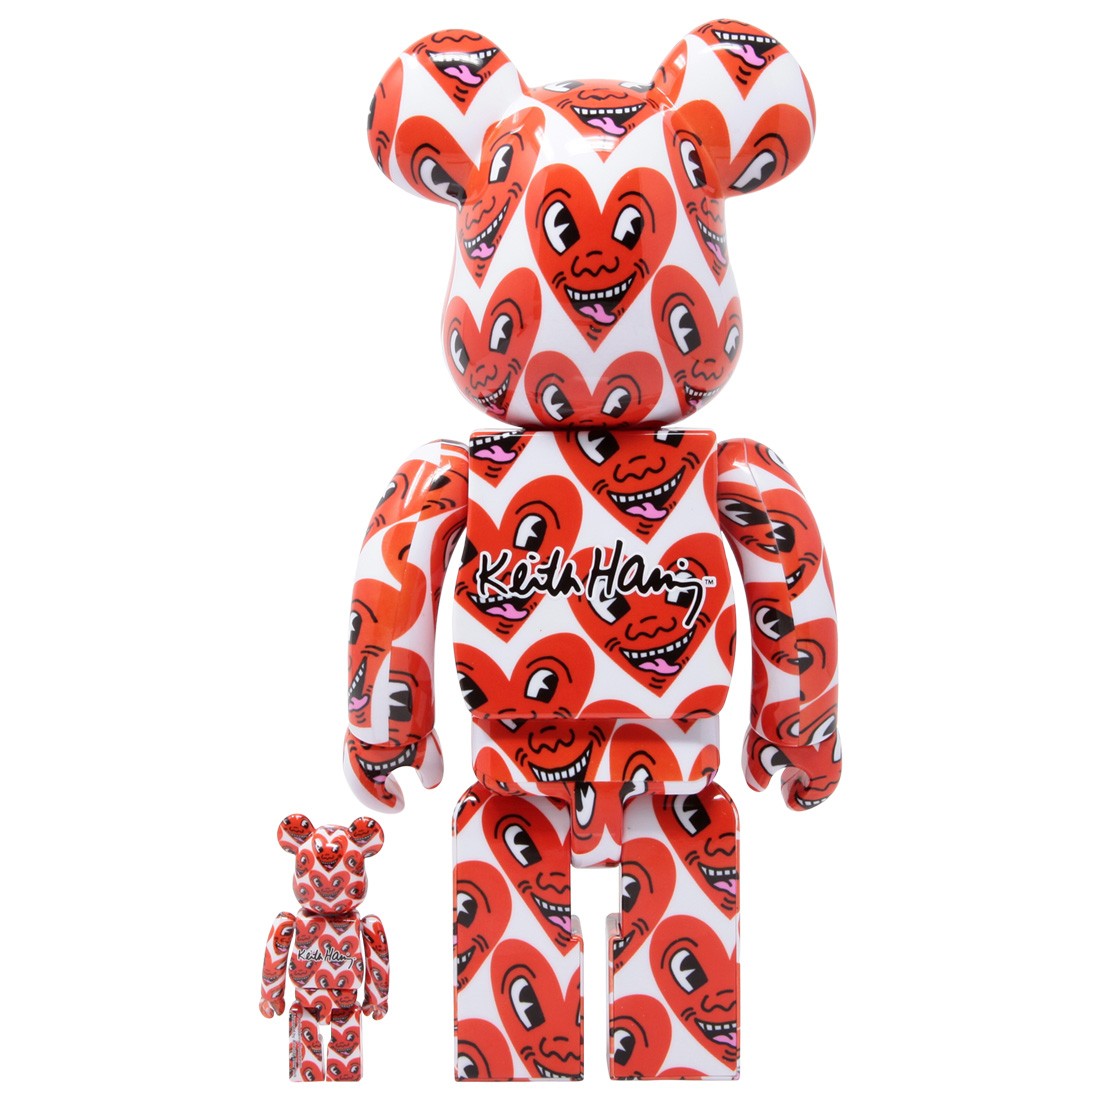 Medicom Keith Haring #6 100% 400% Bearbrick Figure Set (red)